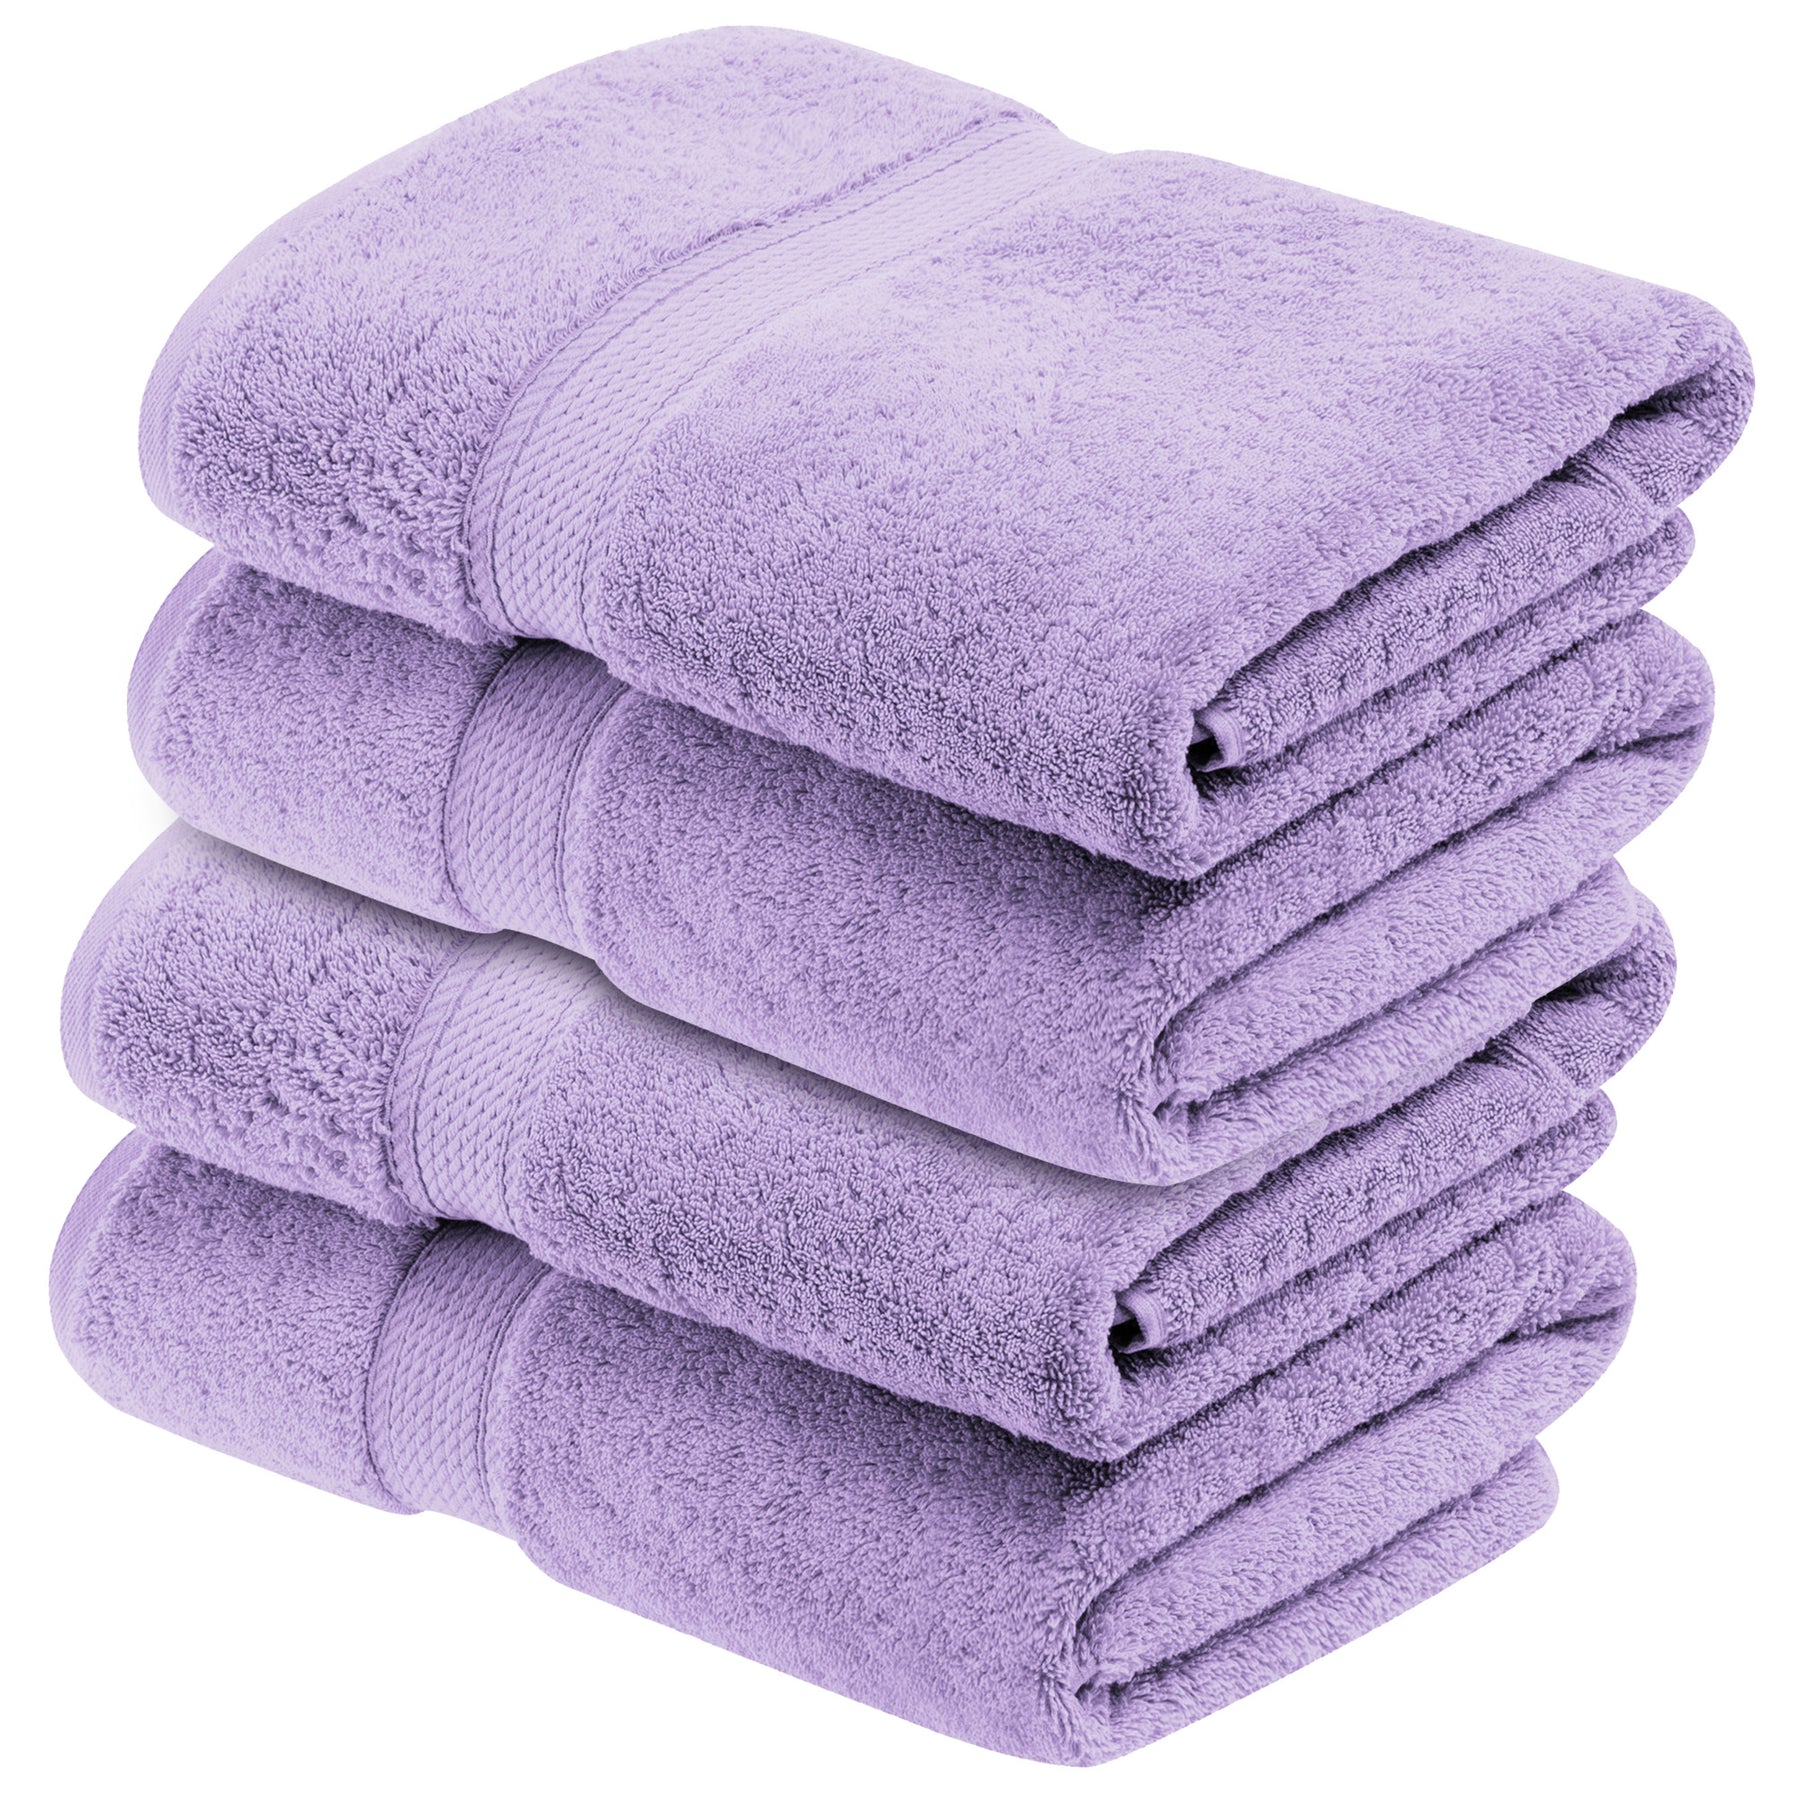 Superior Egyptian Cotton Plush Heavyweight Absorbent Luxury Soft Bath Towel - Purple